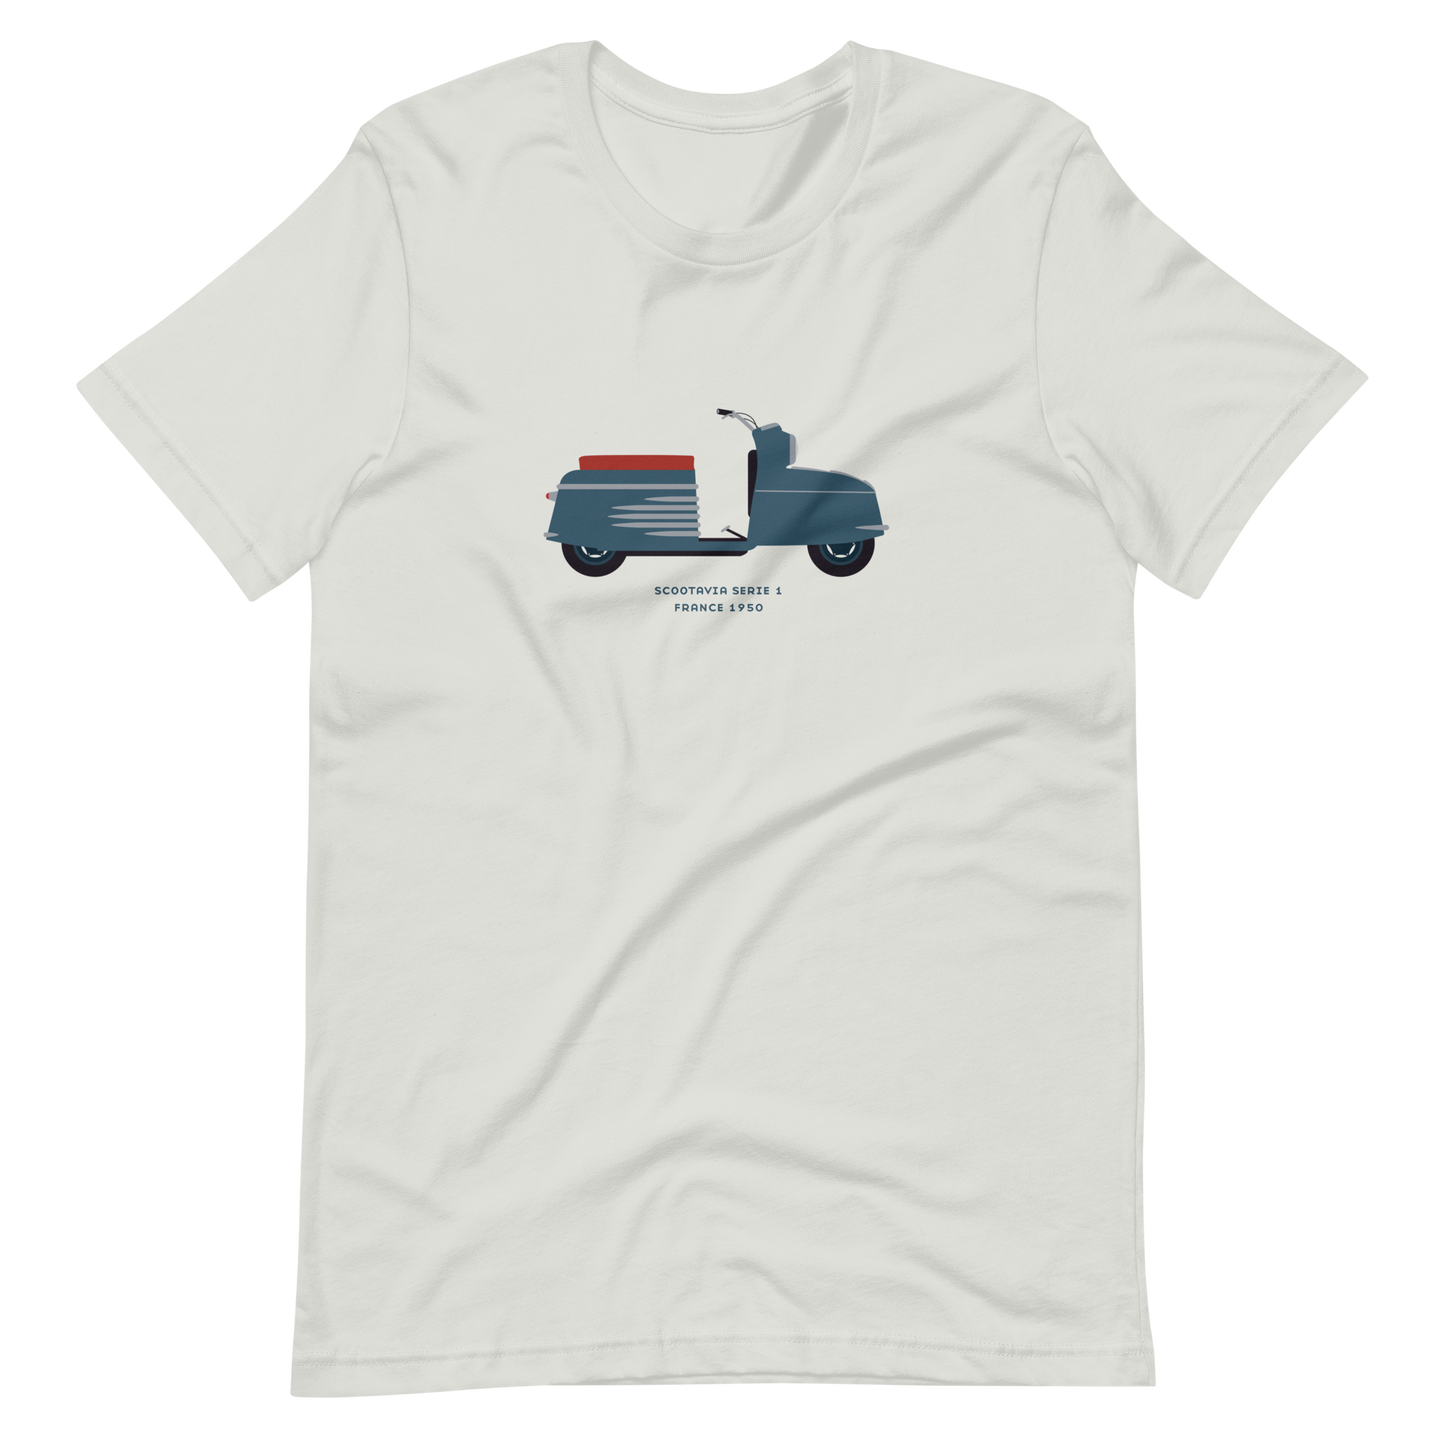 T-Shirt Scooter Scootavia Serie 1, France 1950